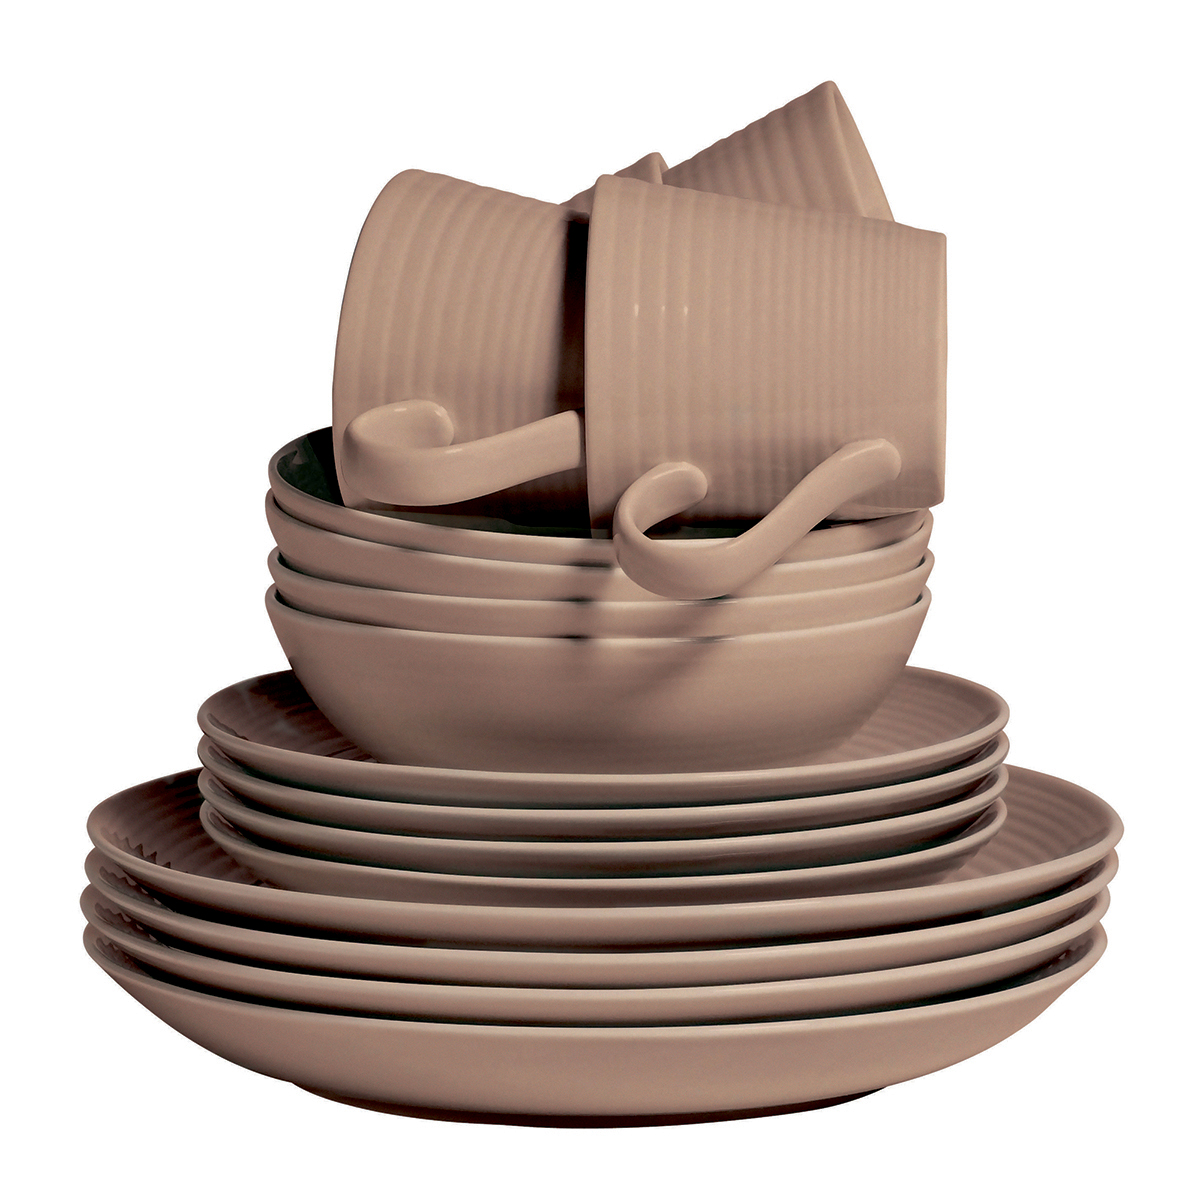 Gordon Ramsay by Royal Doulton Maze 11-Piece Cookware Set with